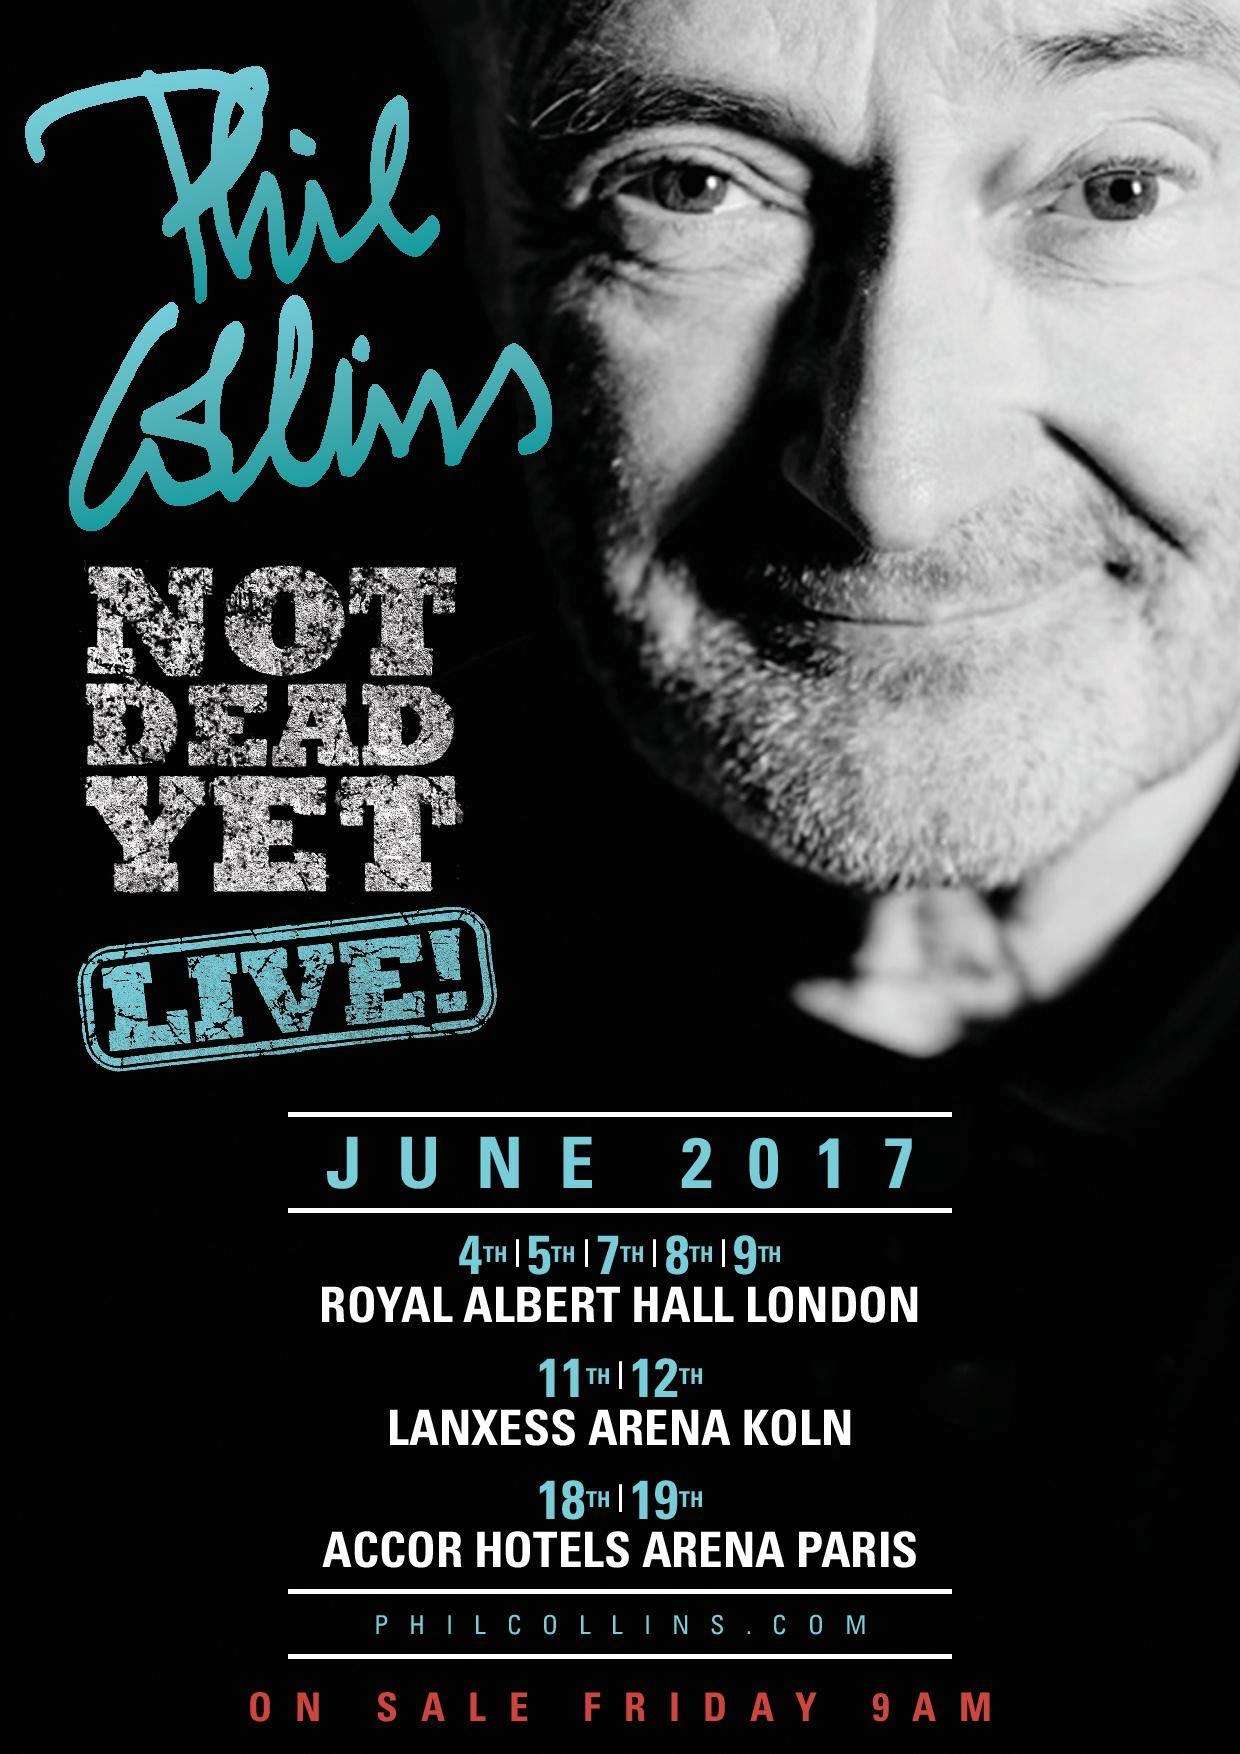 Phil Collins > First Final Farewell Tour